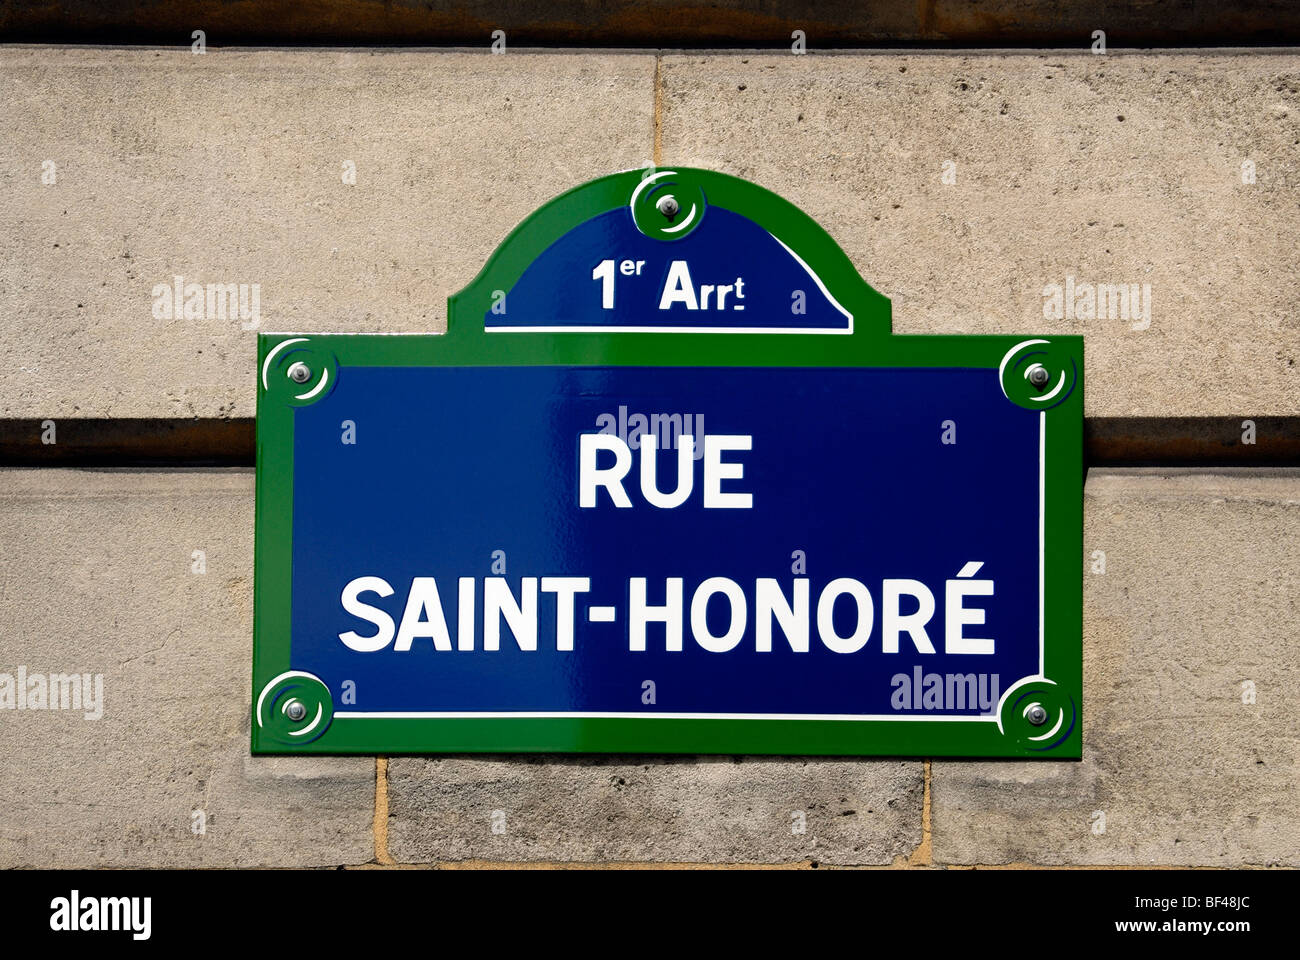 Rue Saint-Honore, Paris France, street sign Stock Photo